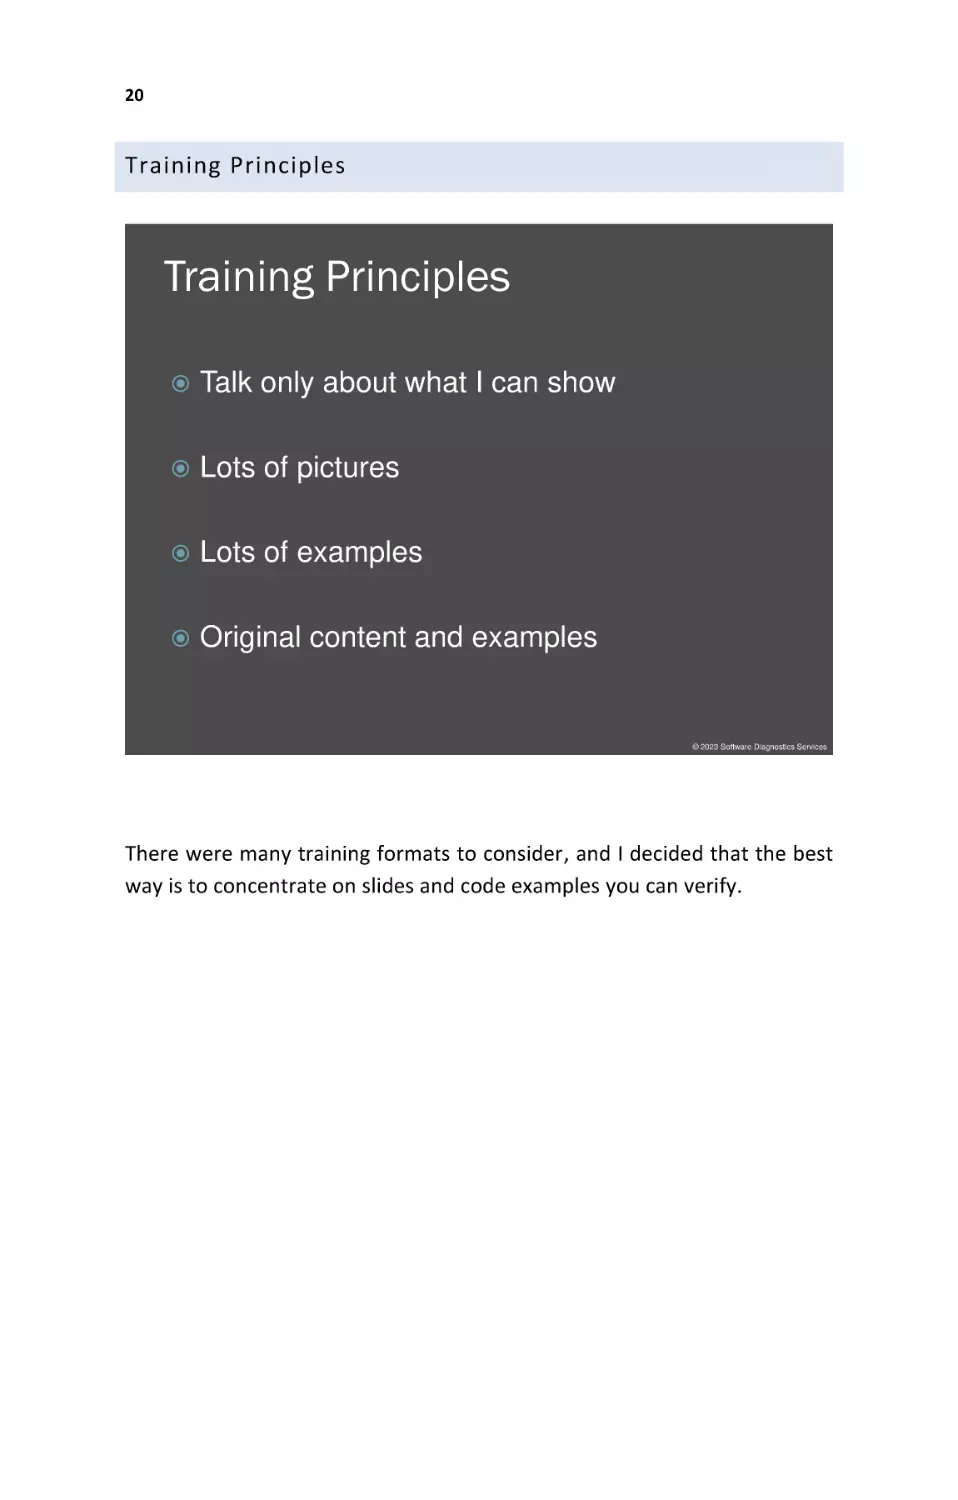 Training Principles